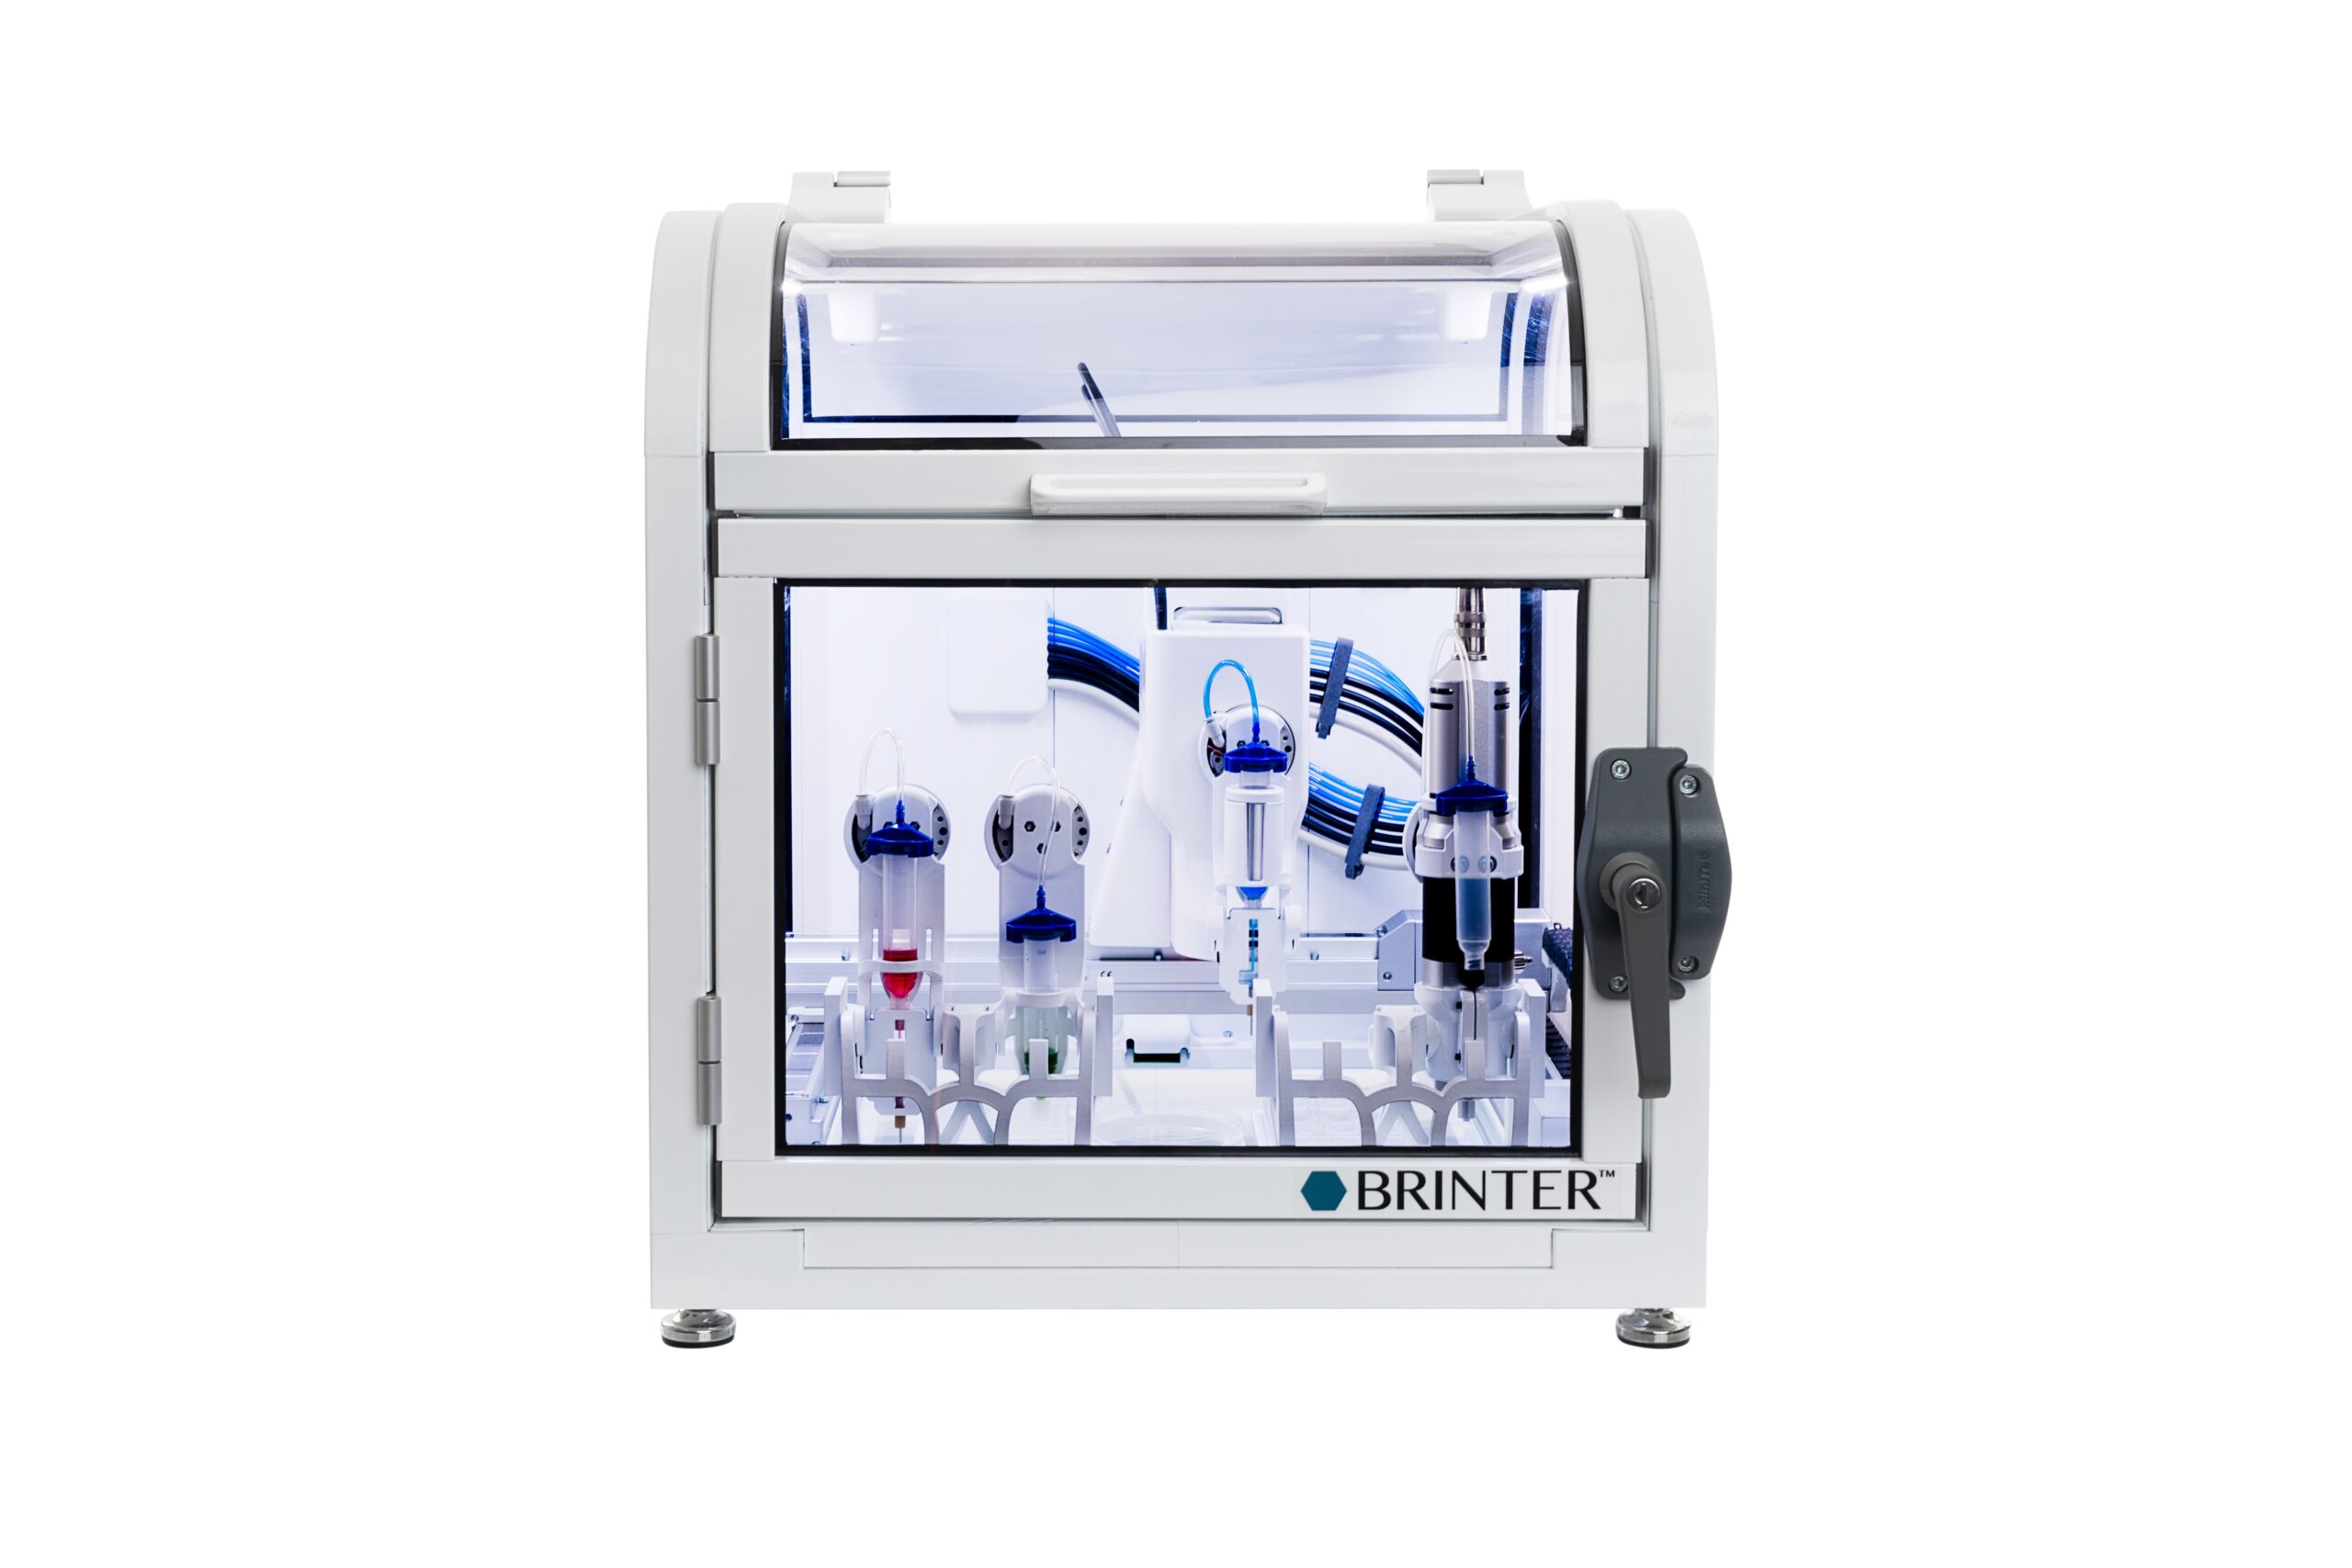 Brinter® One bioprinting platform goes on EU tour